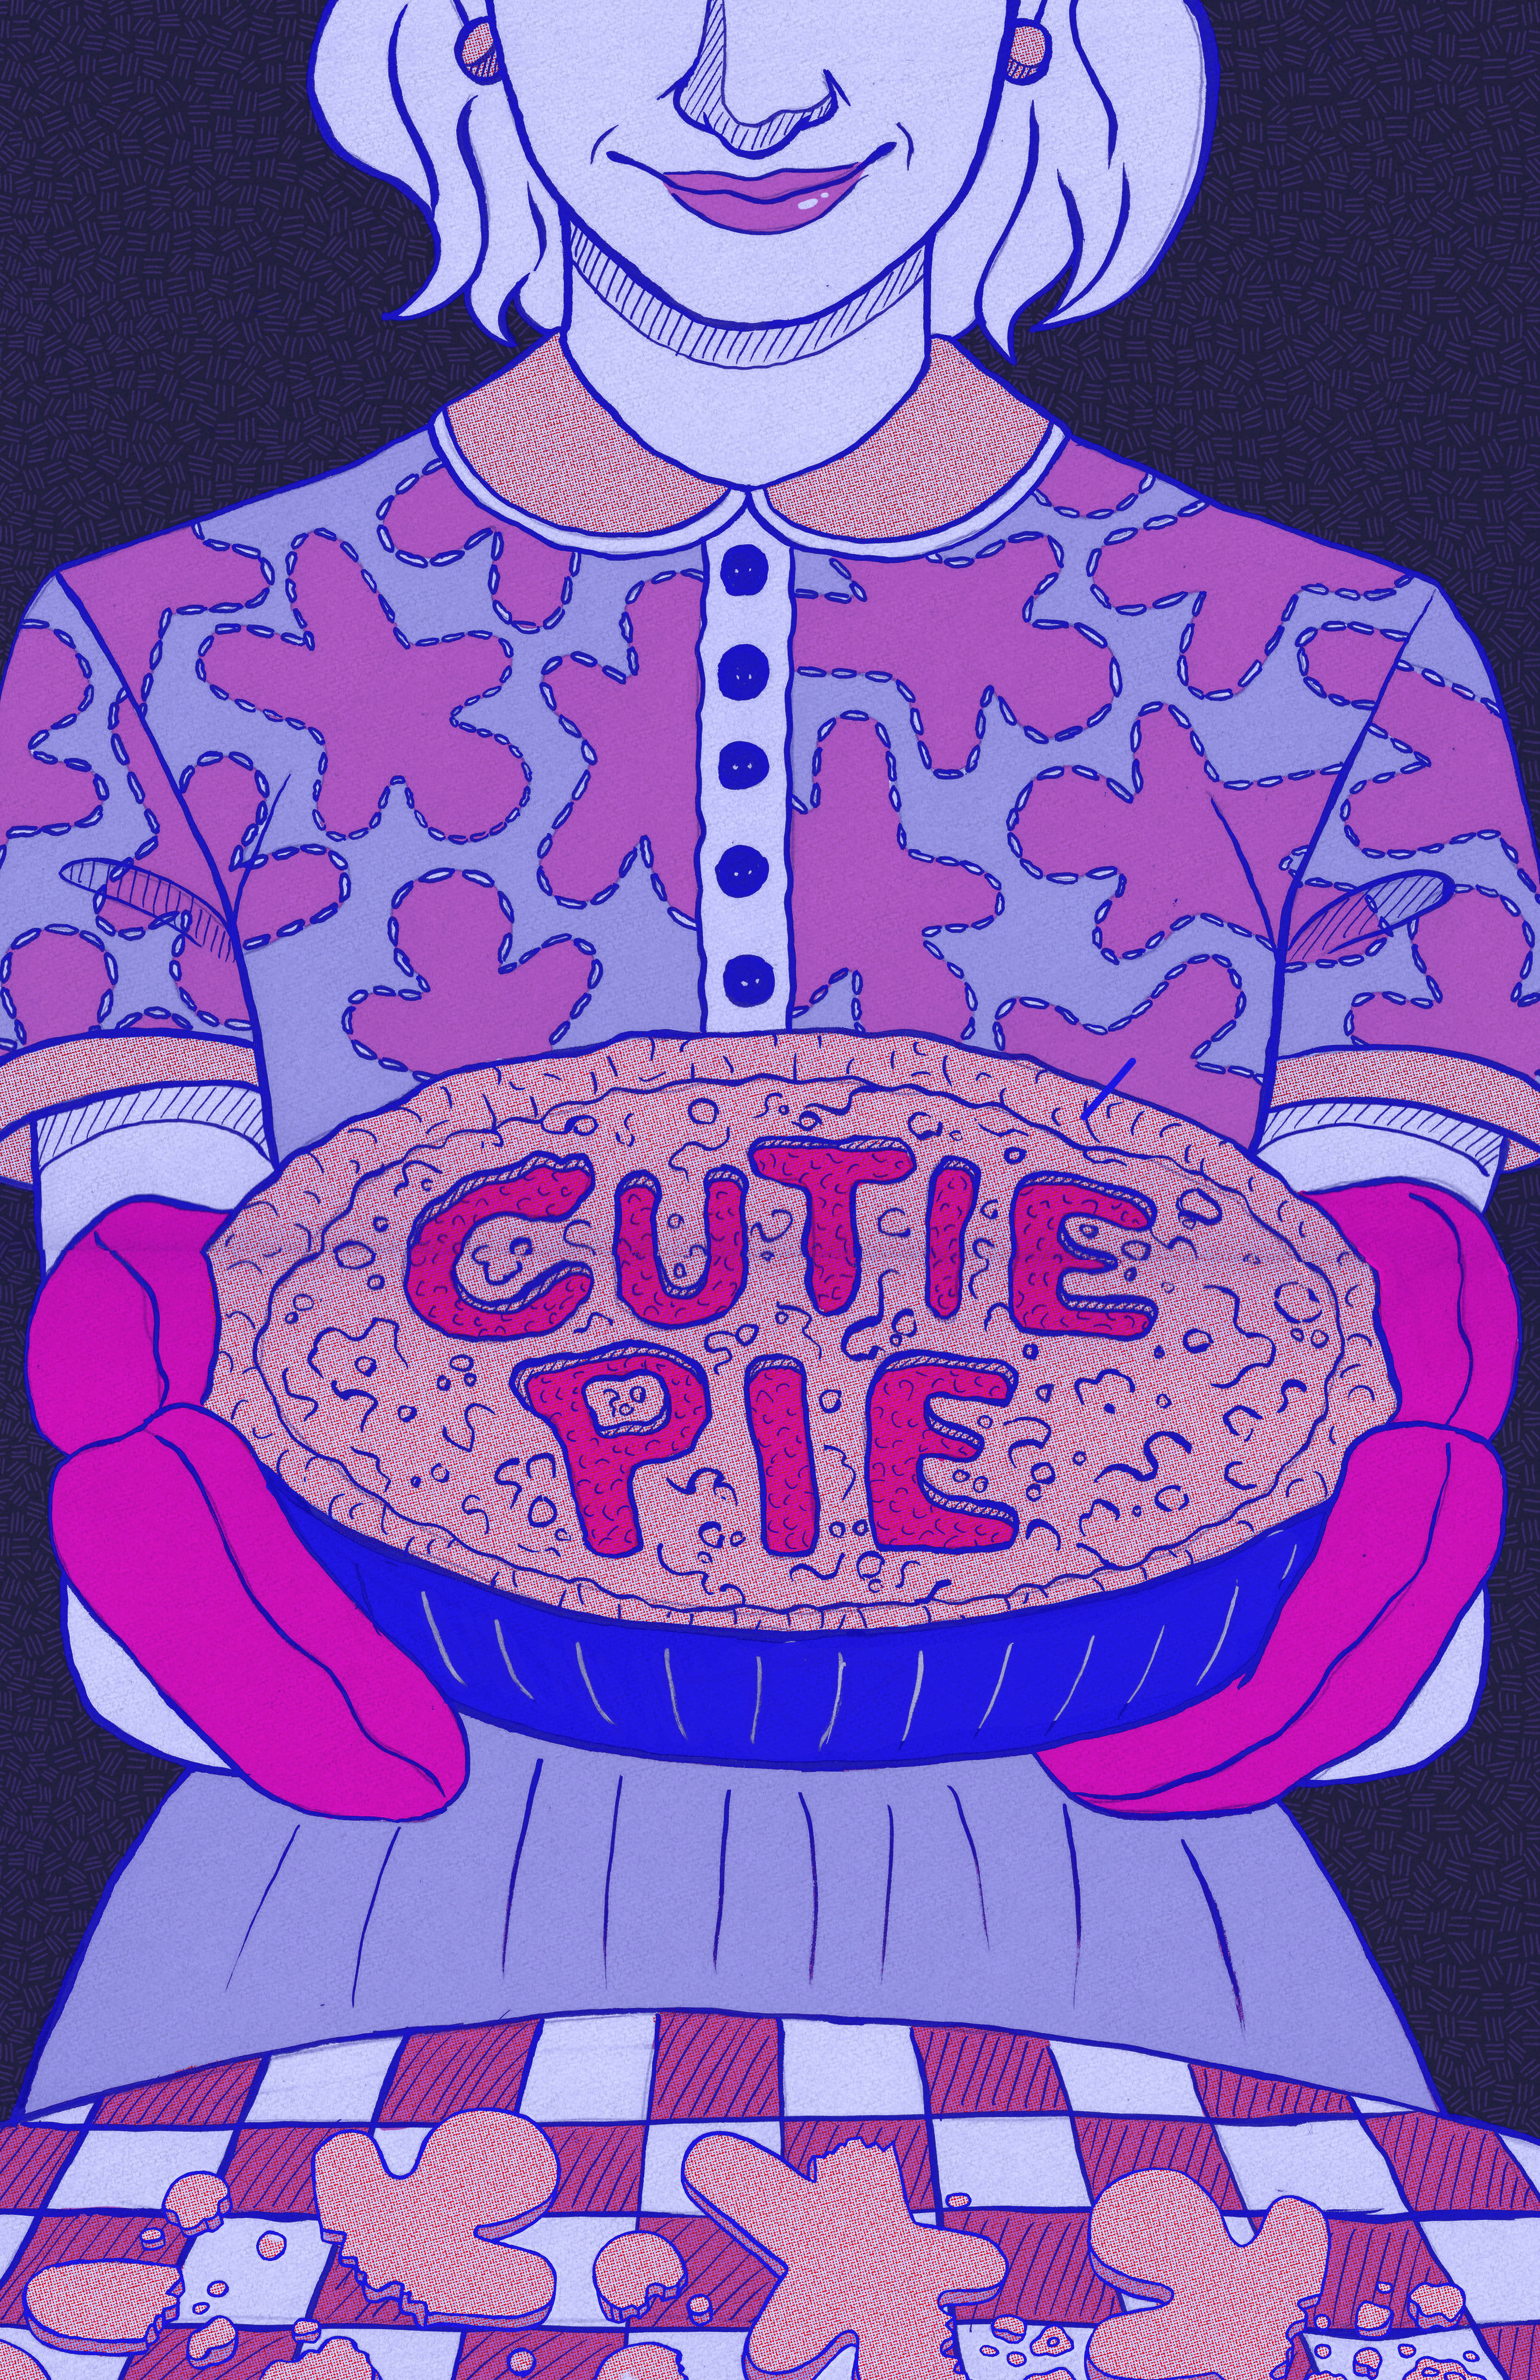 Cutie Pie